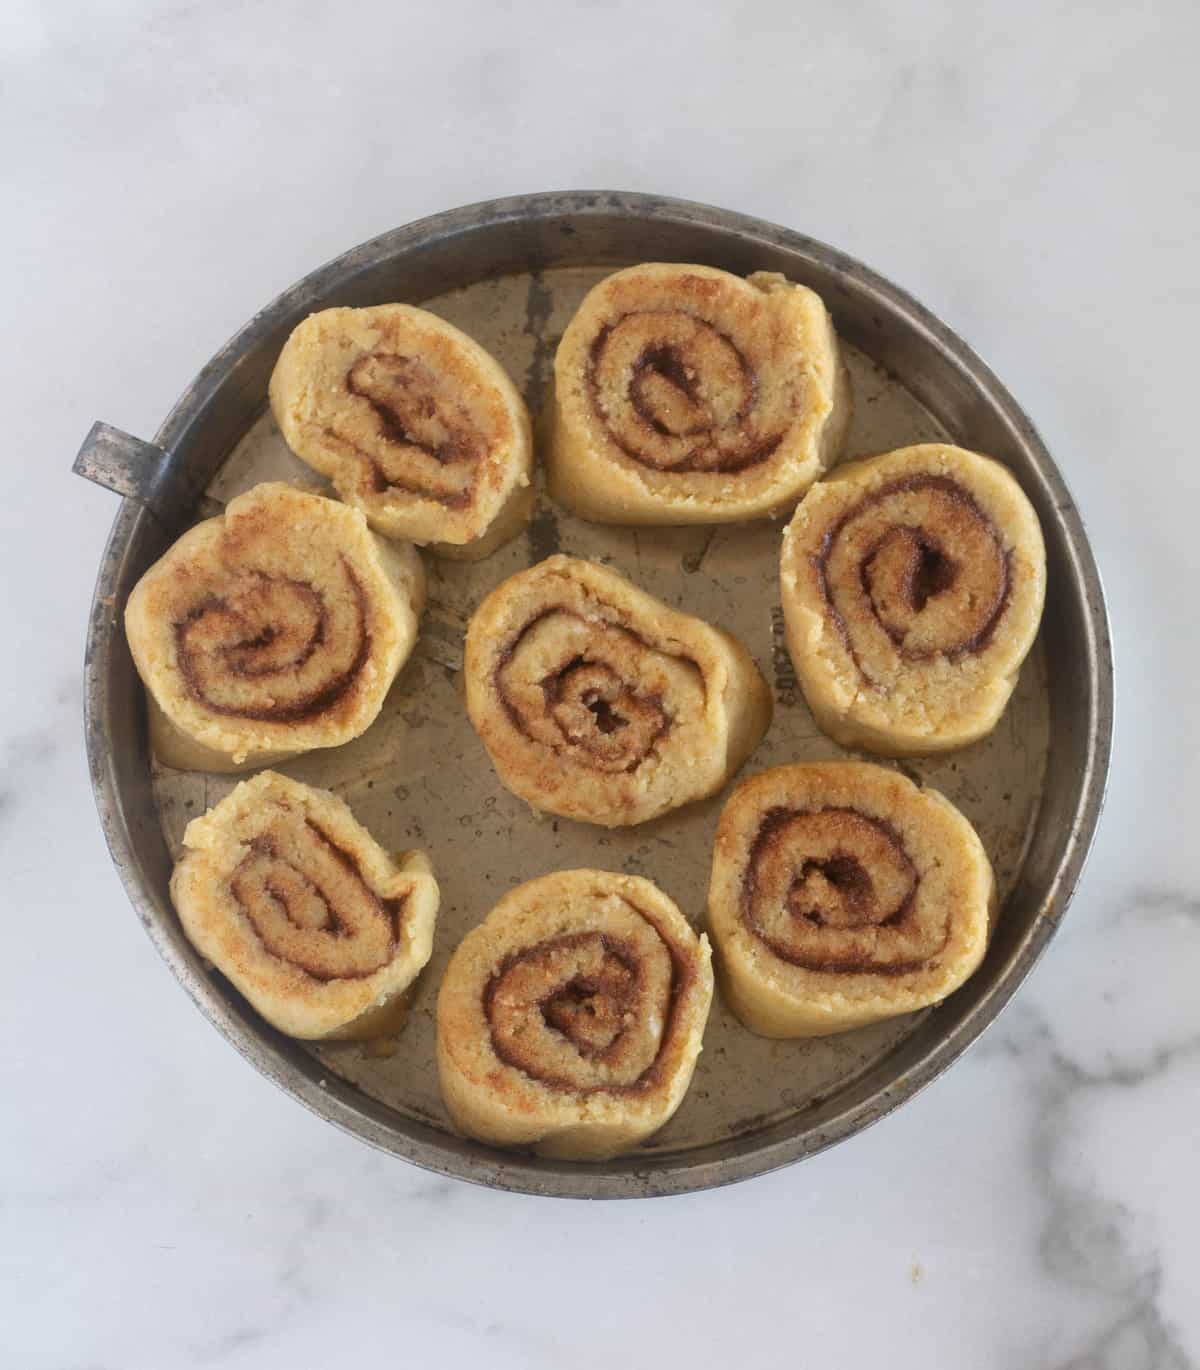 unbaked rolls in pie pan.